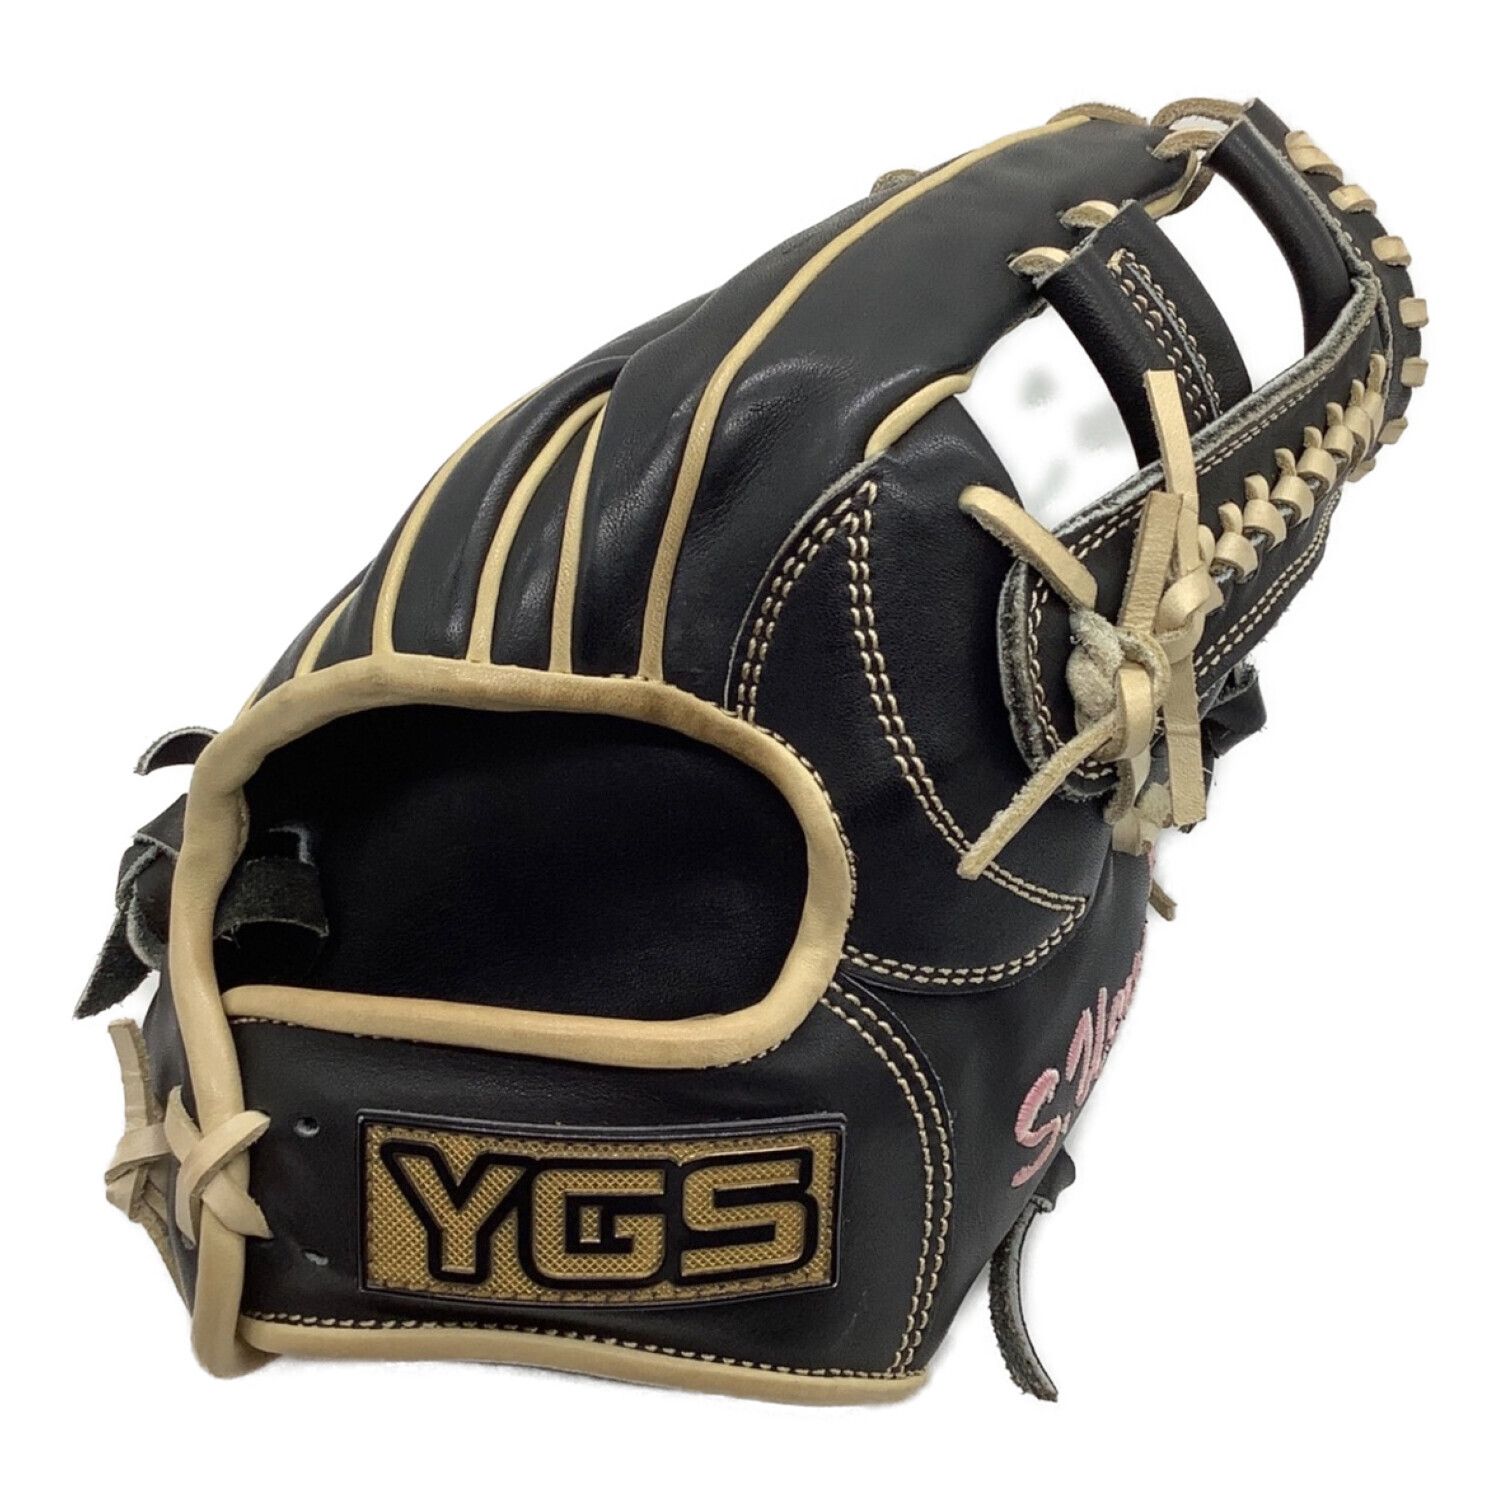 YGS (山本グラブスタジオ) 硬式グローブ 約29cm ブラック TG Leather